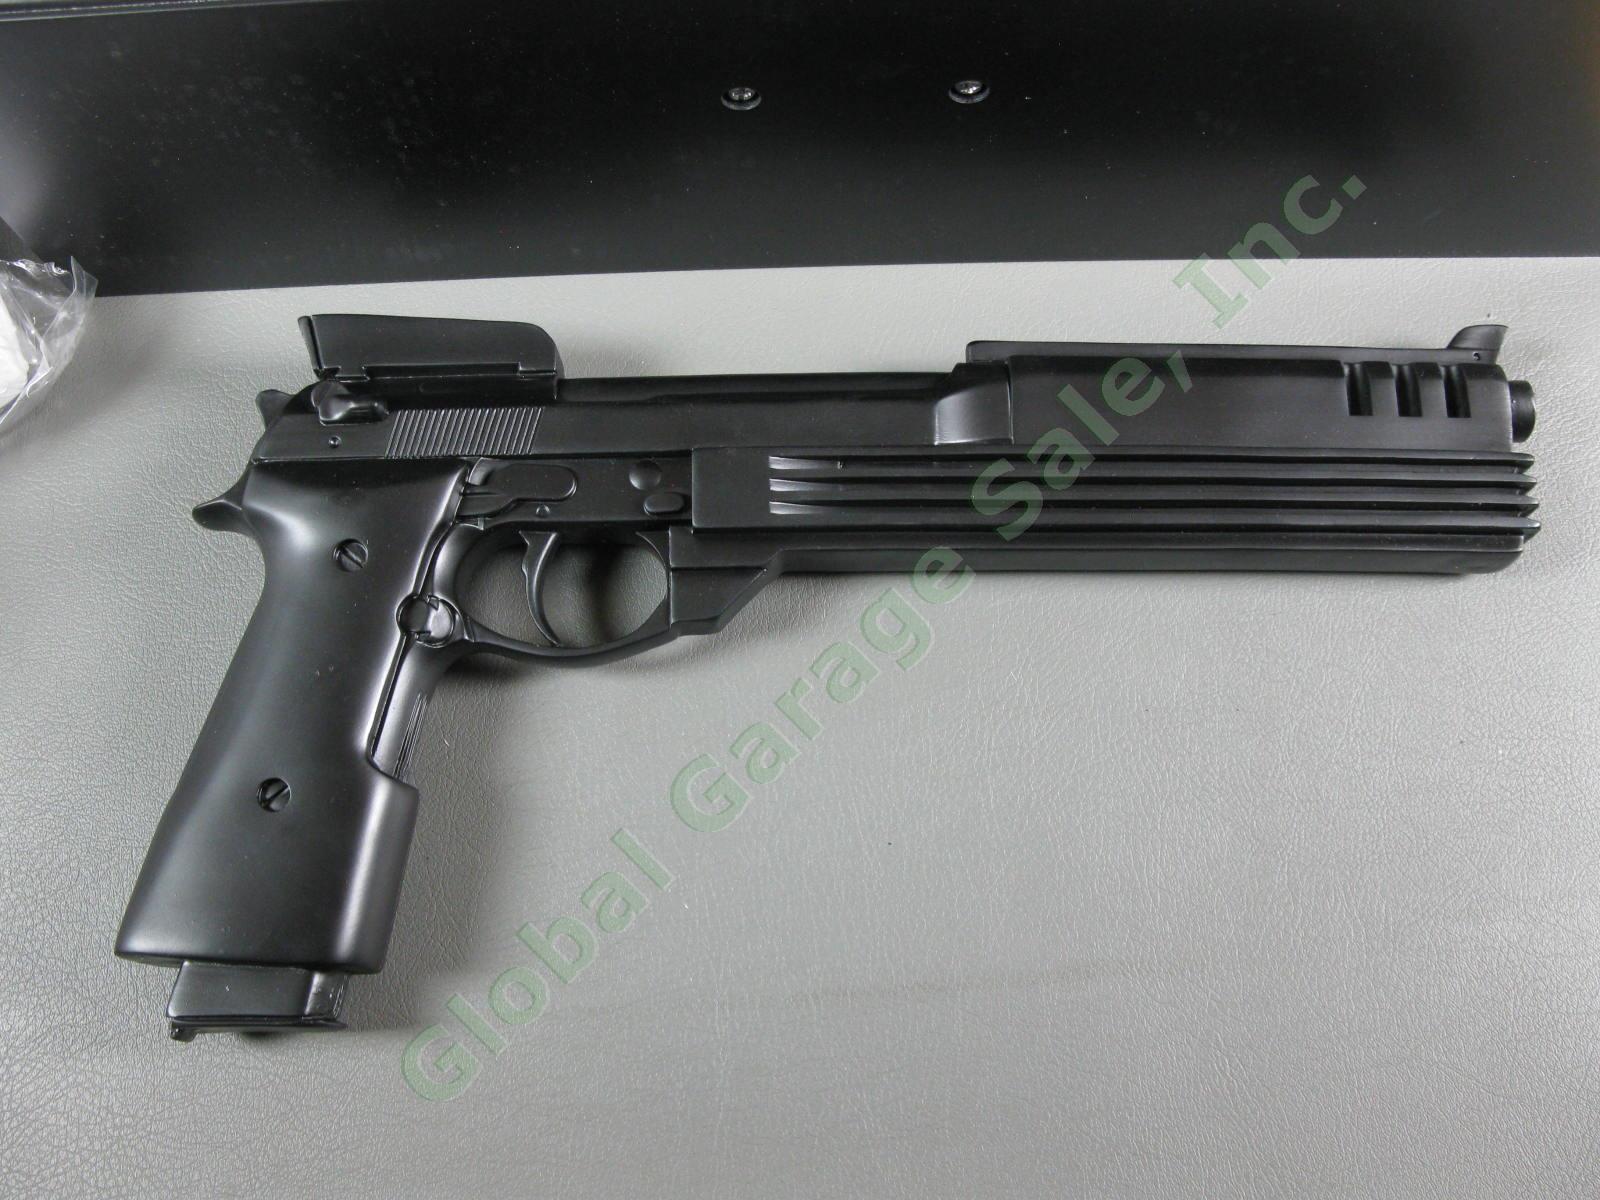 Neca ROBOCOP Beretta M93R Auto-9 Resin Gun Replica Prop Limited Edition 696/1000 7